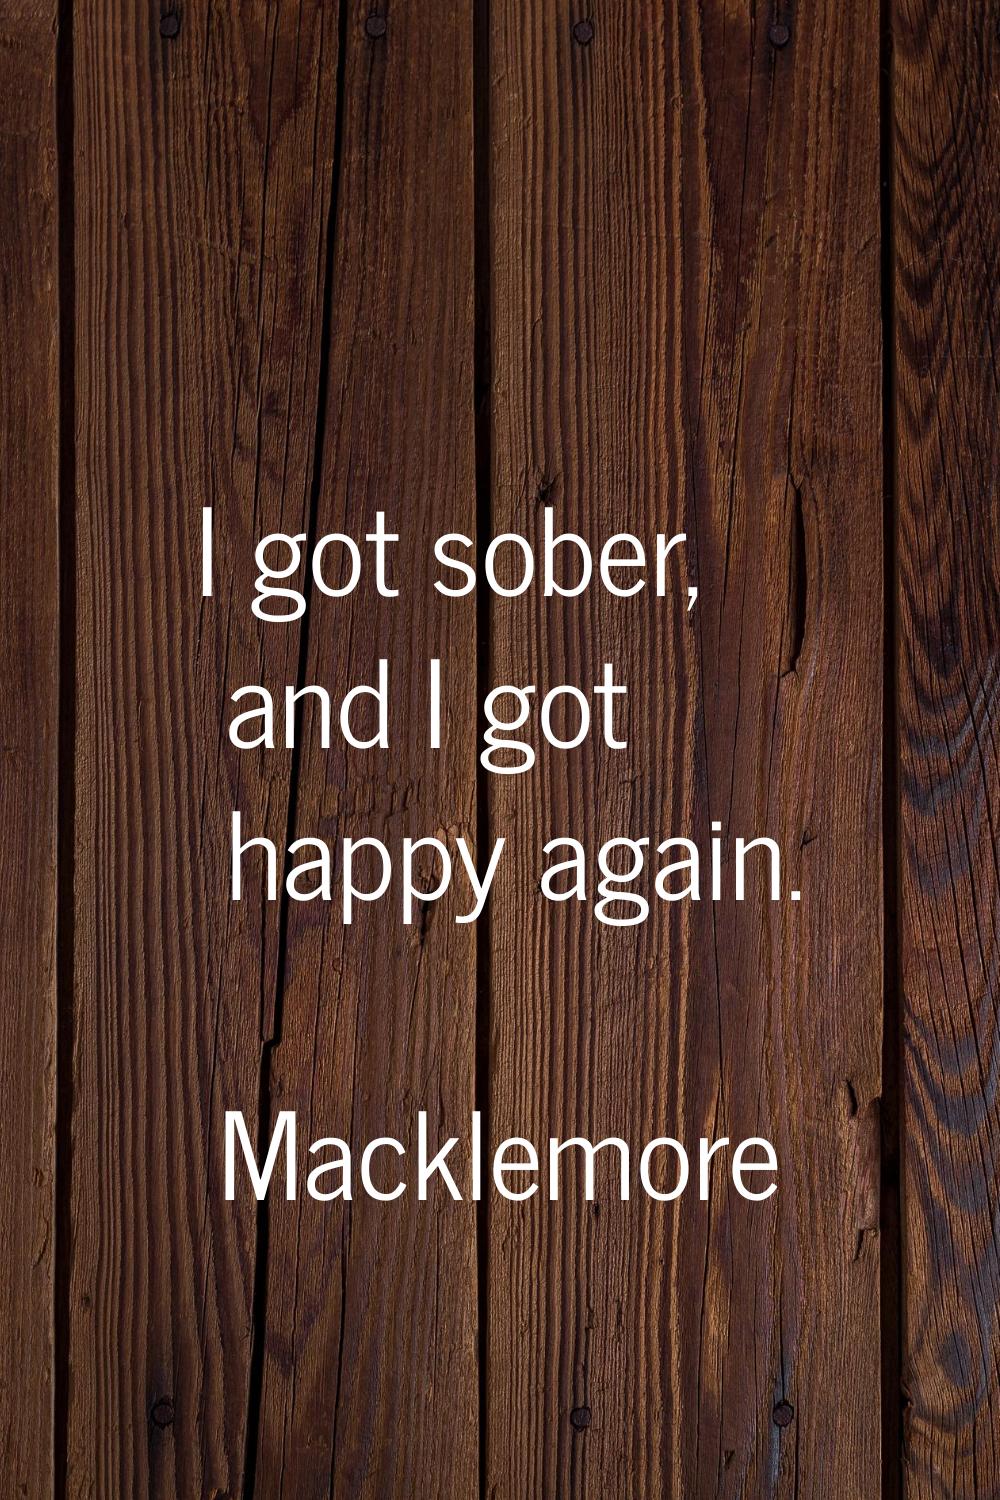 I got sober, and I got happy again.